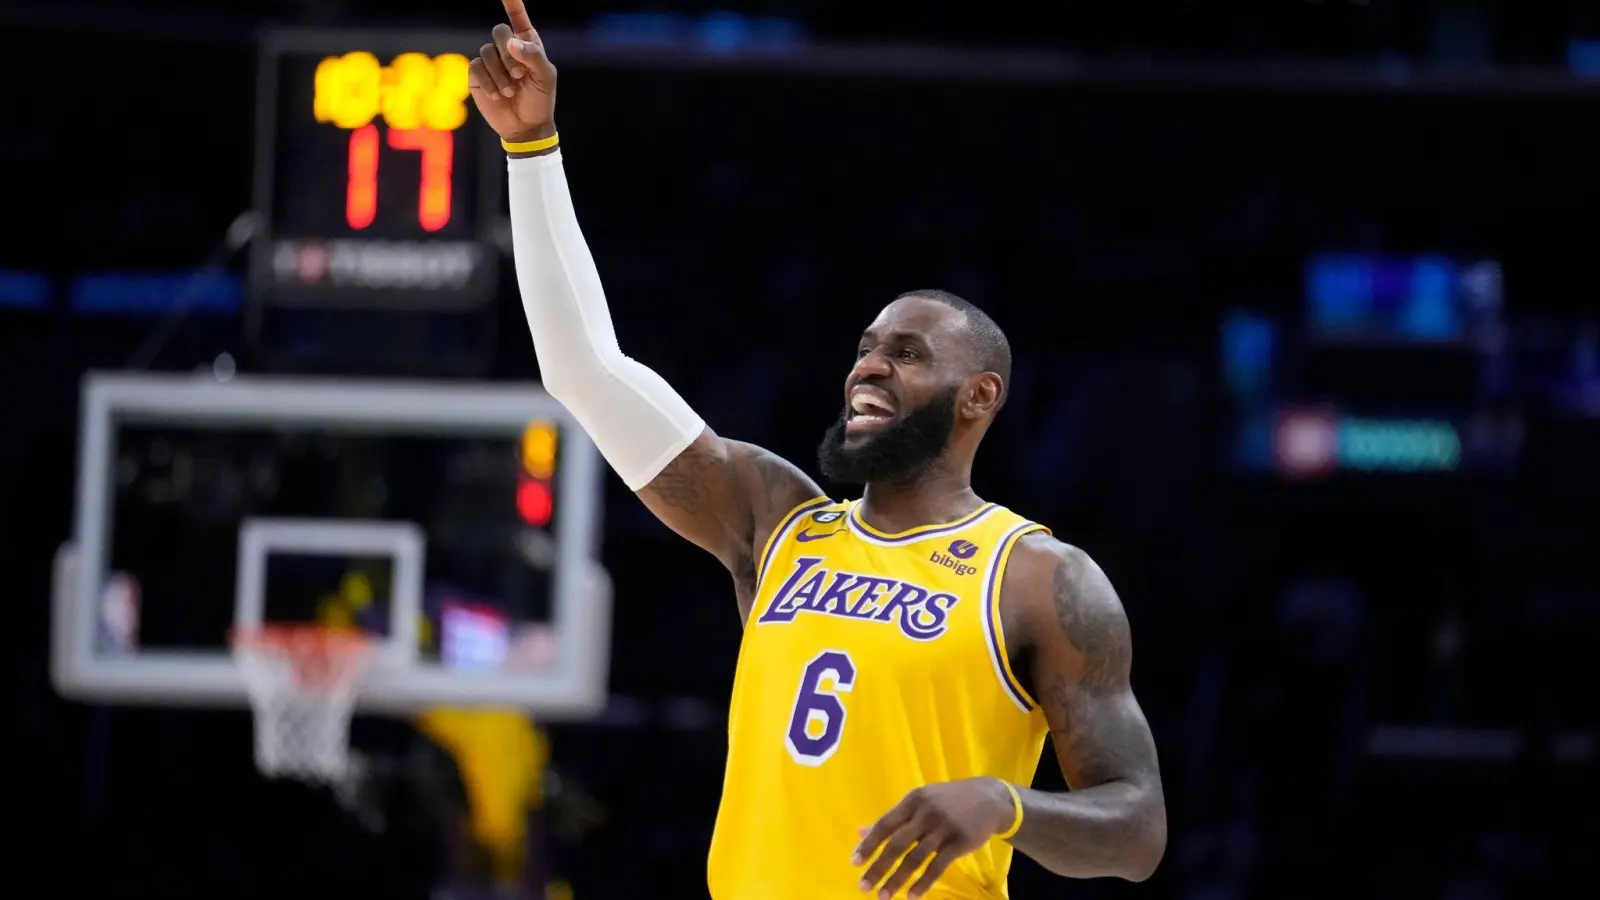 Basketball-Superstar LeBron James spielt auch nächste Saison bei den Lakers. (Foto: Marcio Jose Sanchez/AP/dpa)